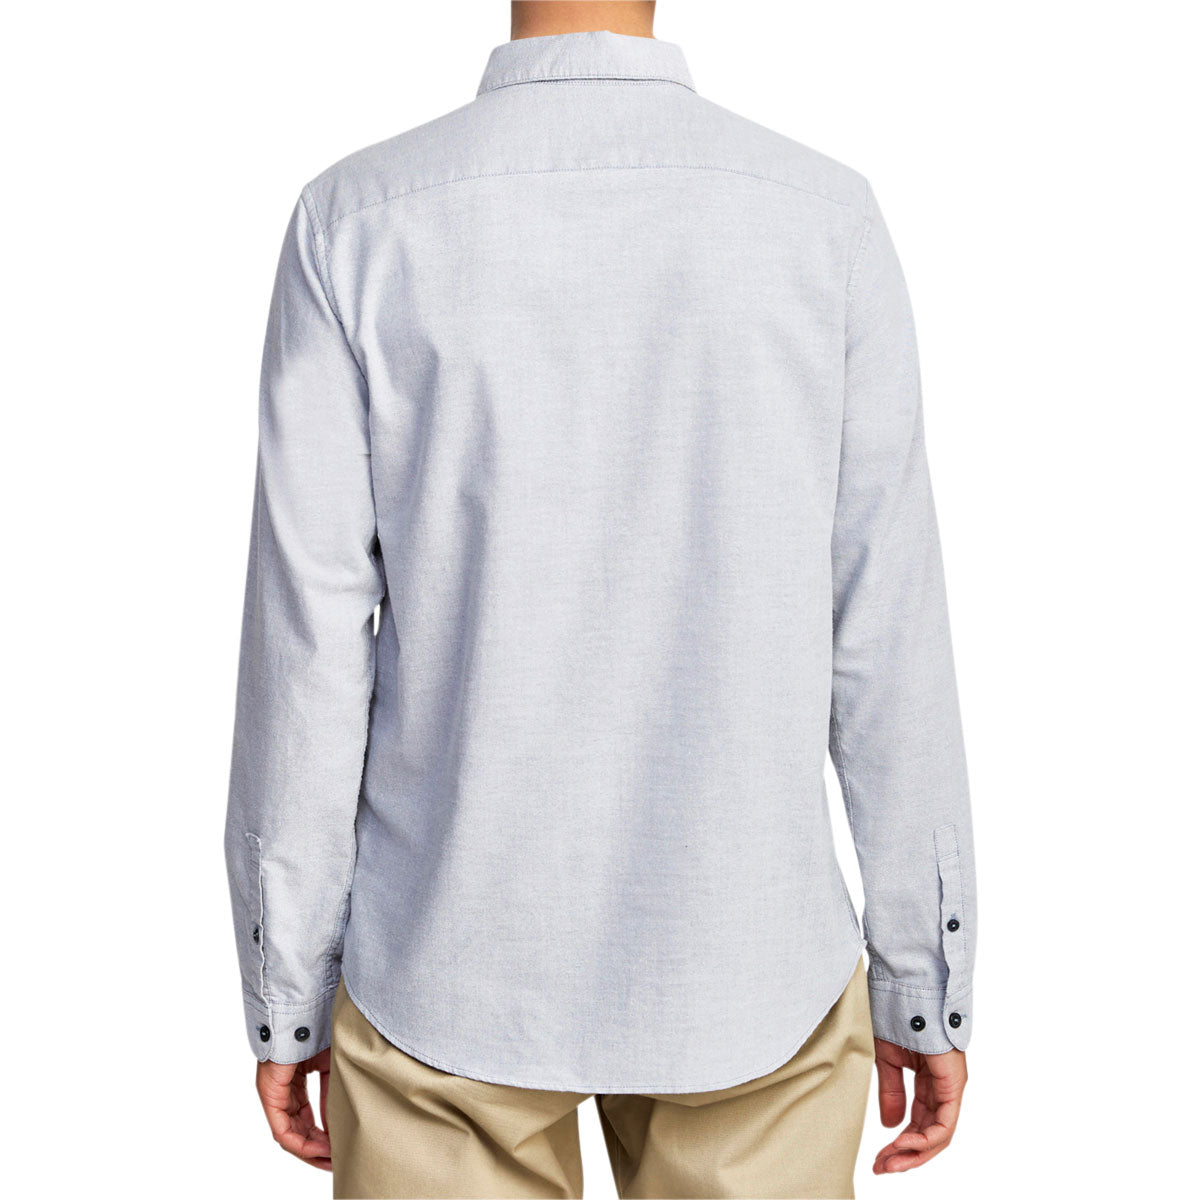 RVCA That'll Do Stretch Long Sleeve Shirt - Pavement image 2